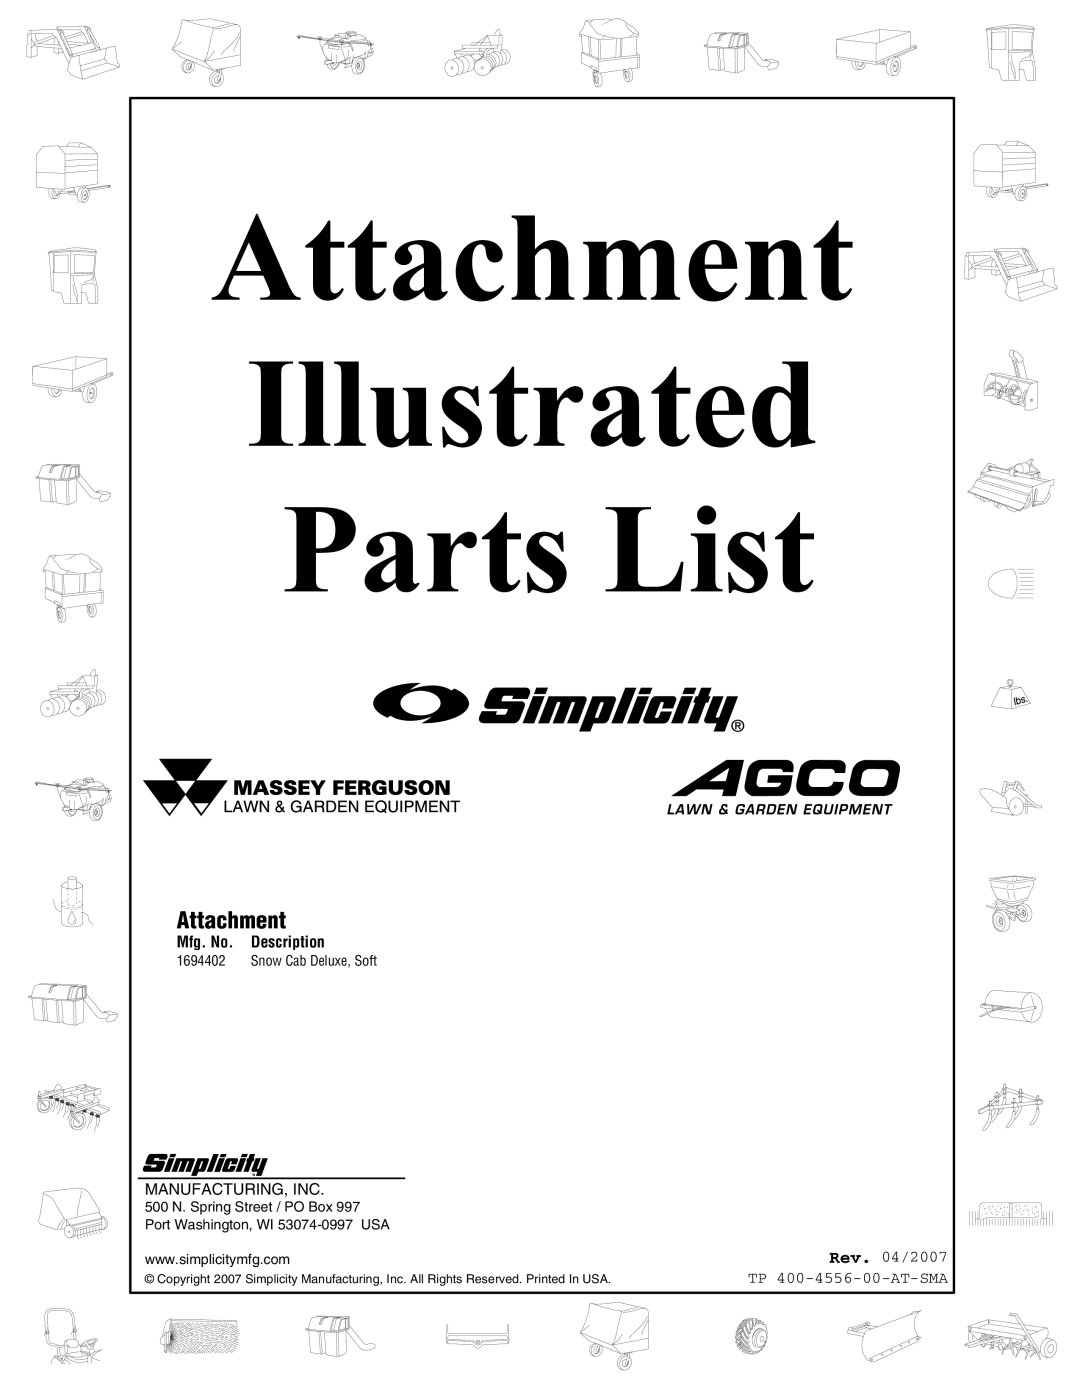 Snapper manual Attachment, Mfg. No. Description, Rev. 04/2007, TP 400-4556-00-AT-SMA, Illustrated, Parts List 